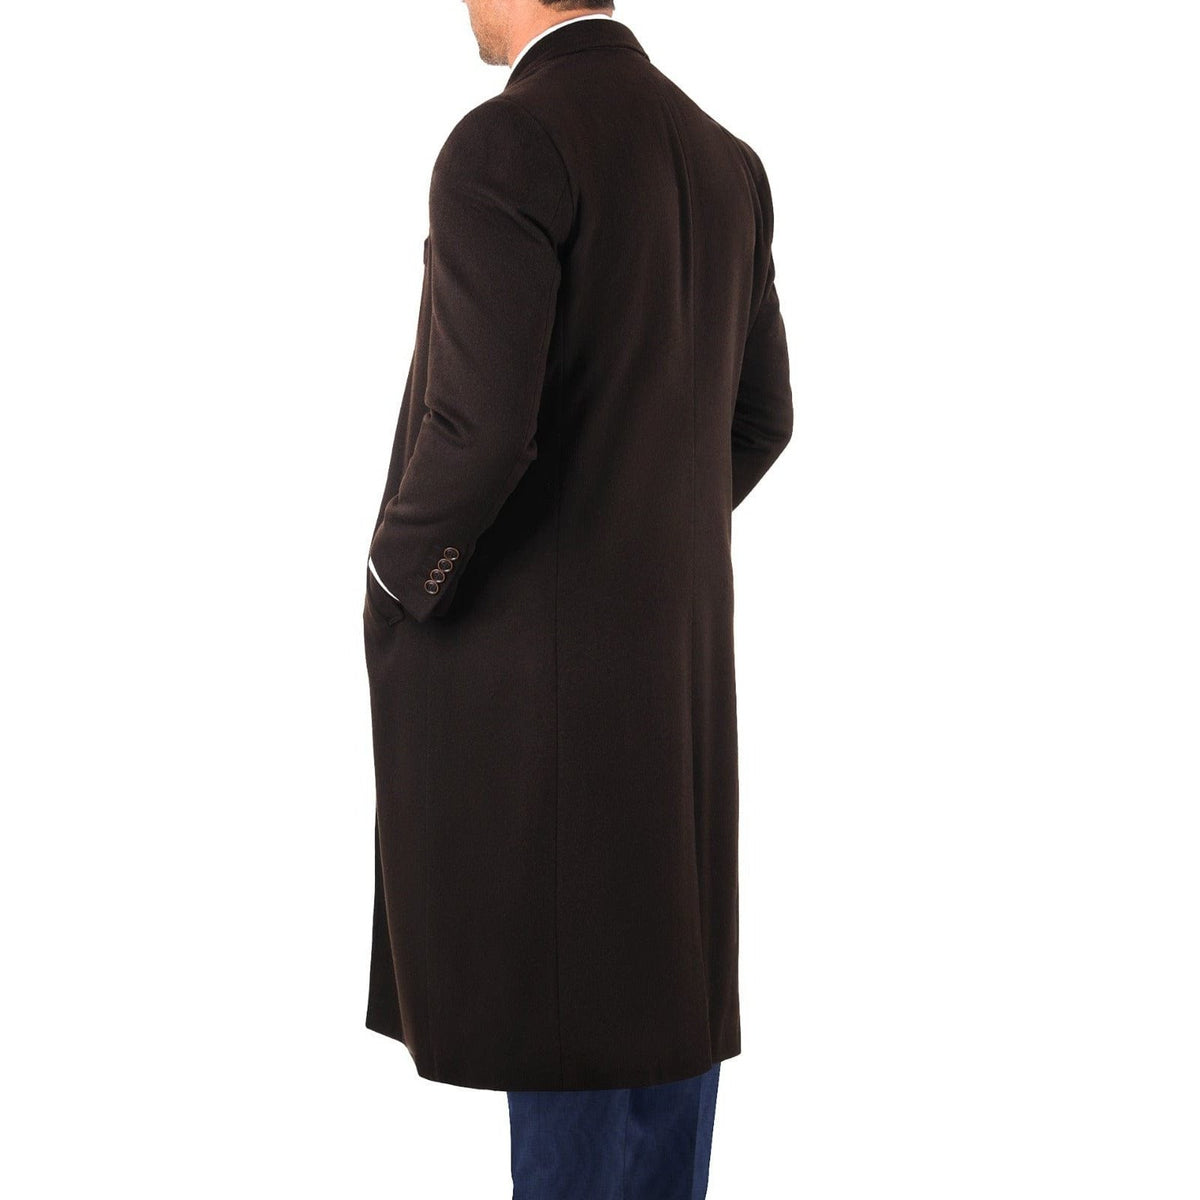 Arthur Black OUTERWEAR Mens Regular Fit Solid Dark Brown Full Length Wool Cashmere Overcoat Top Coat